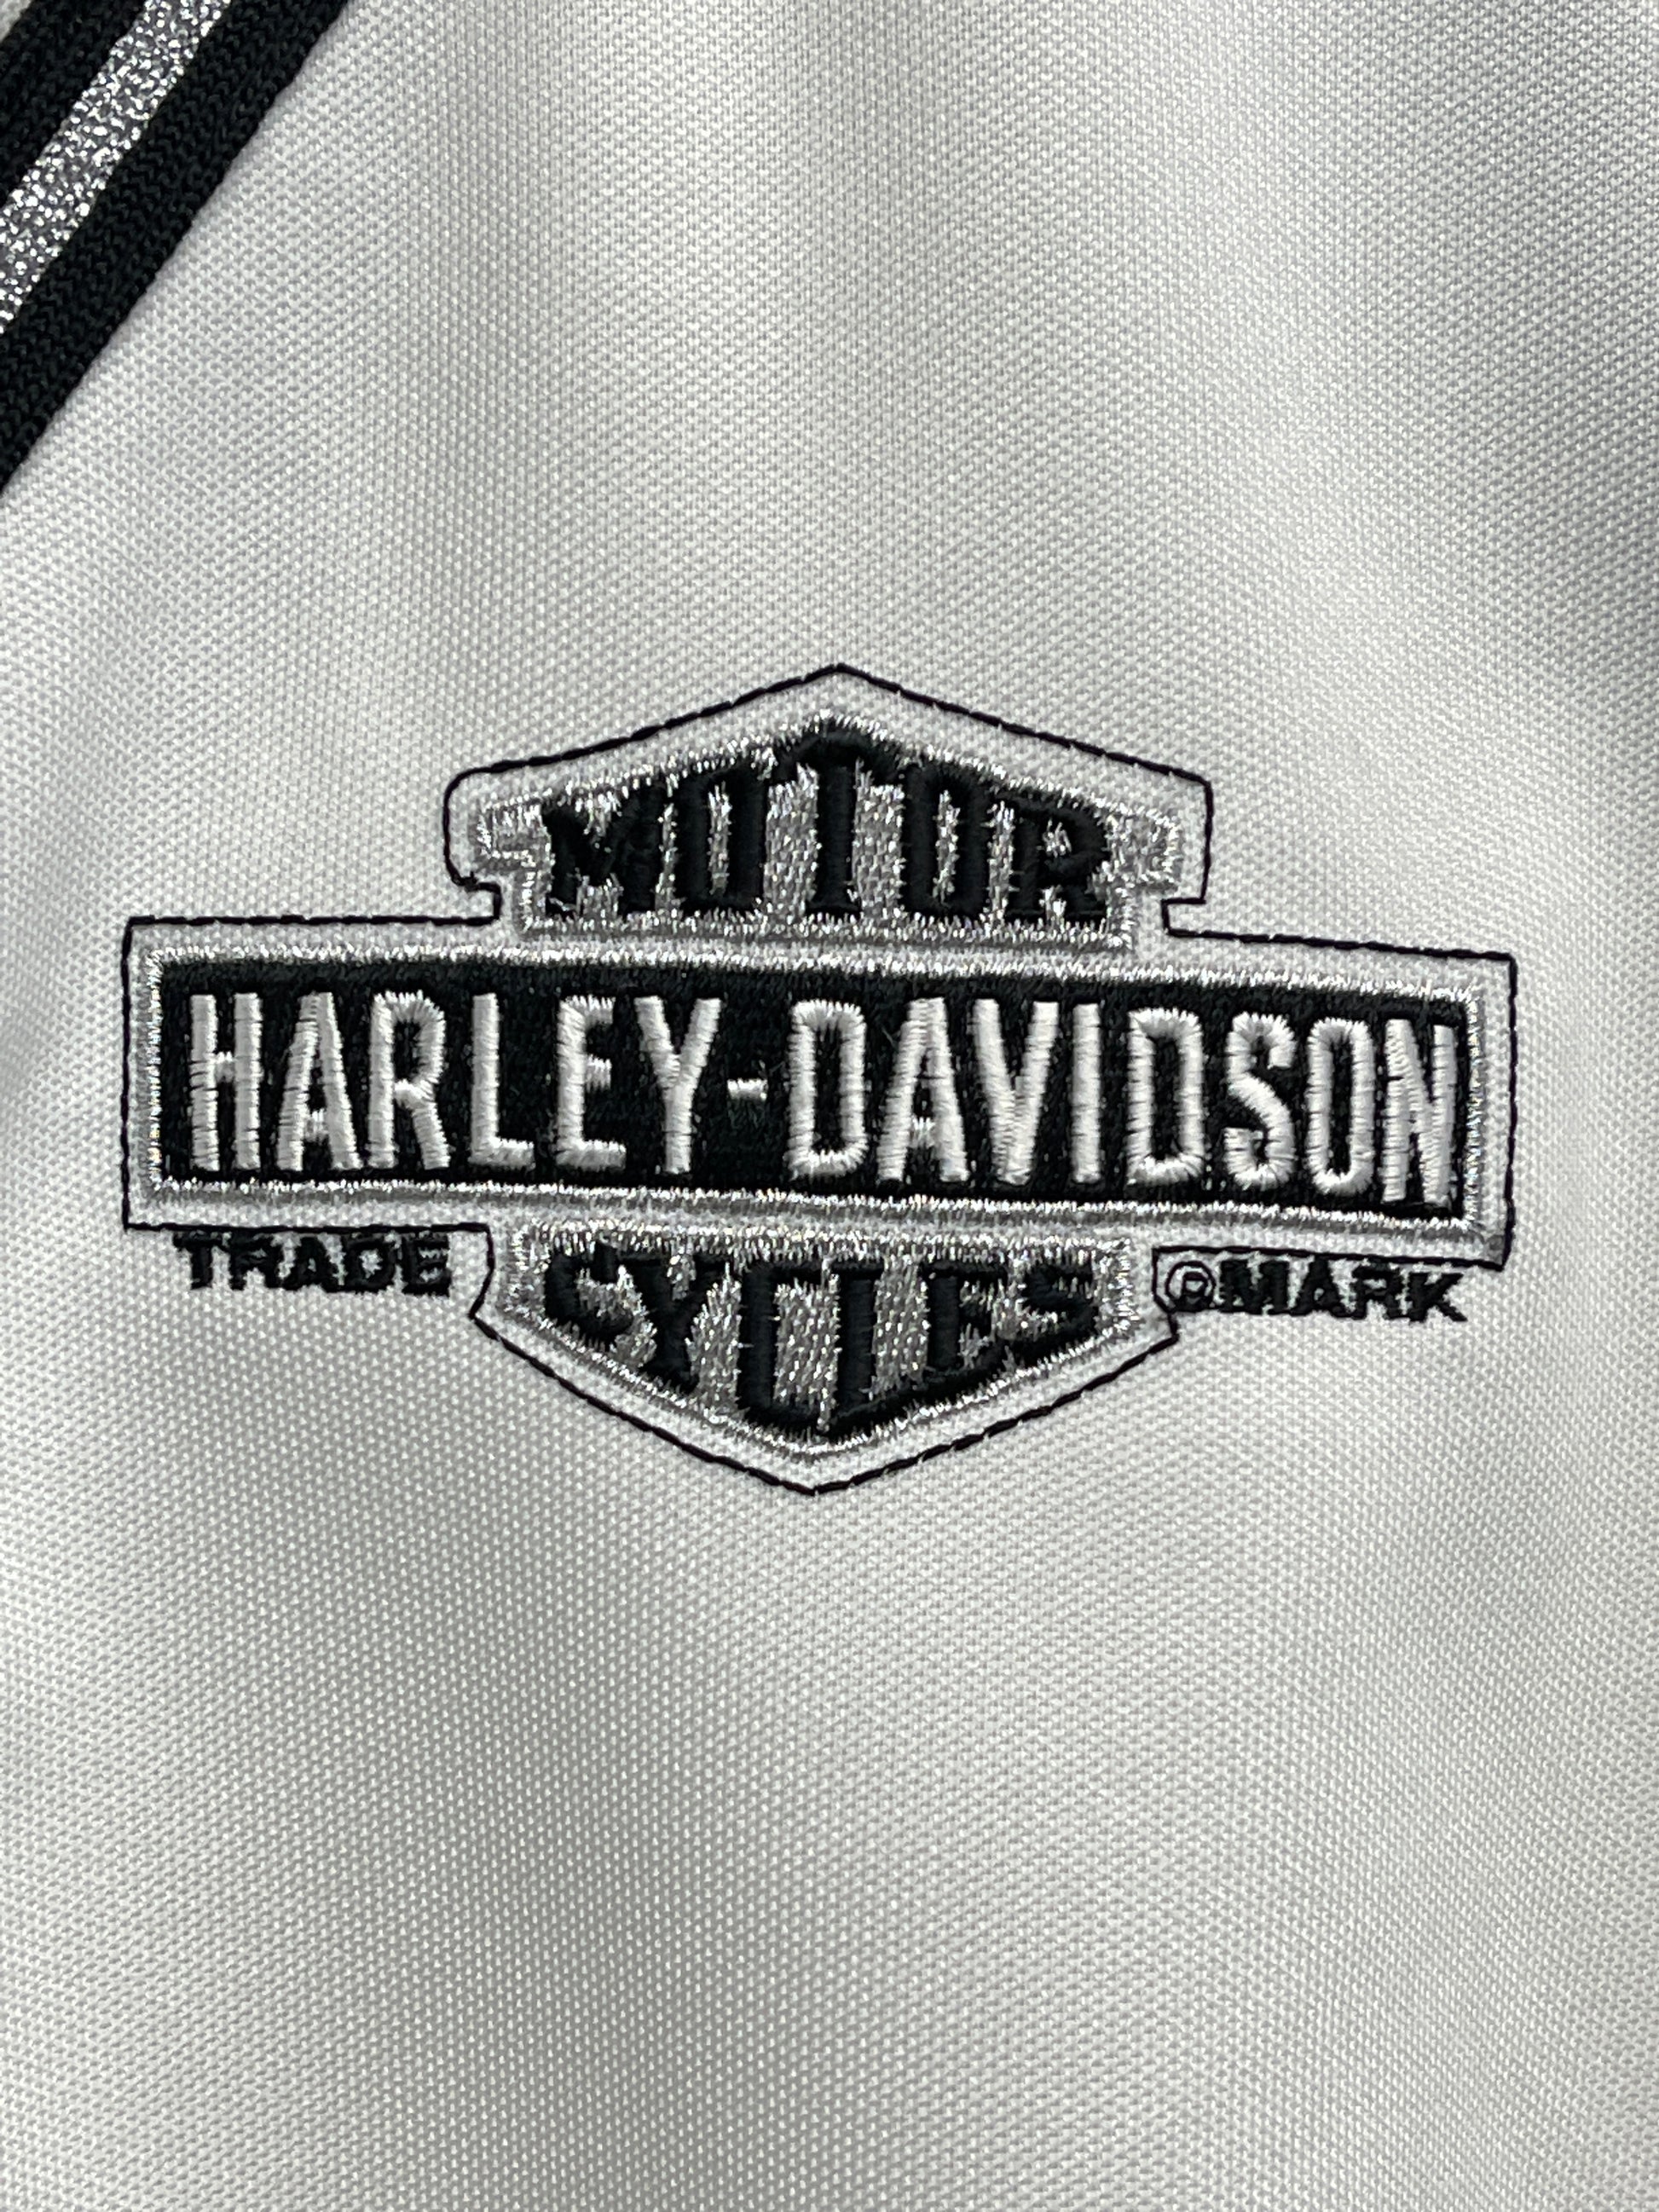 Harley Davidson Jersey Shirt